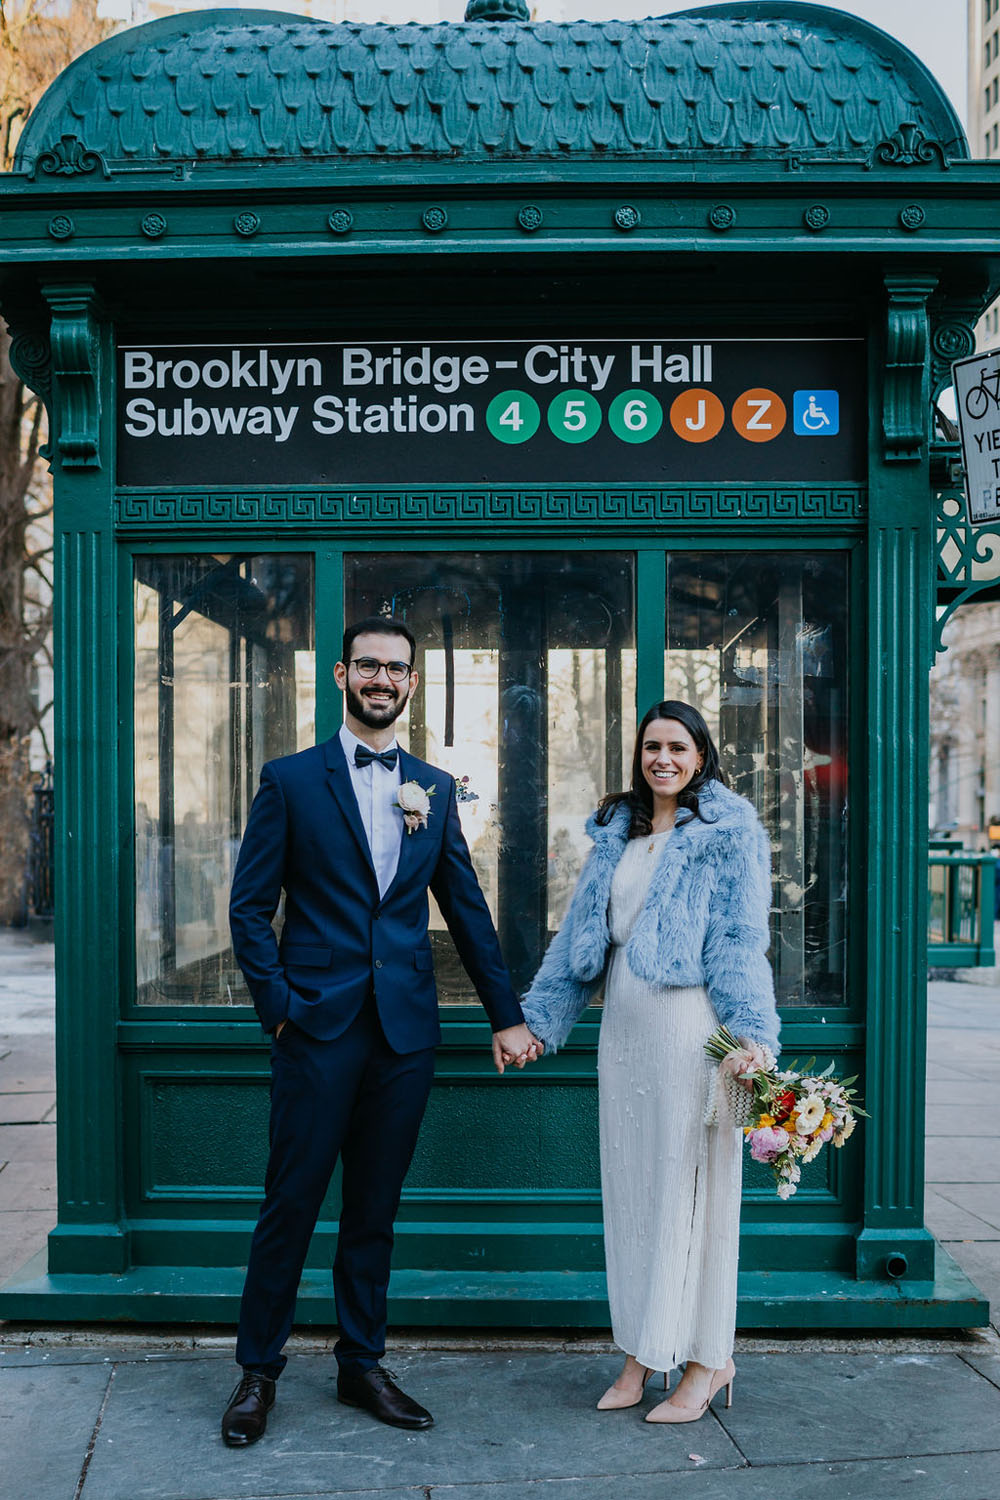 Bridal coat for NYC wedding